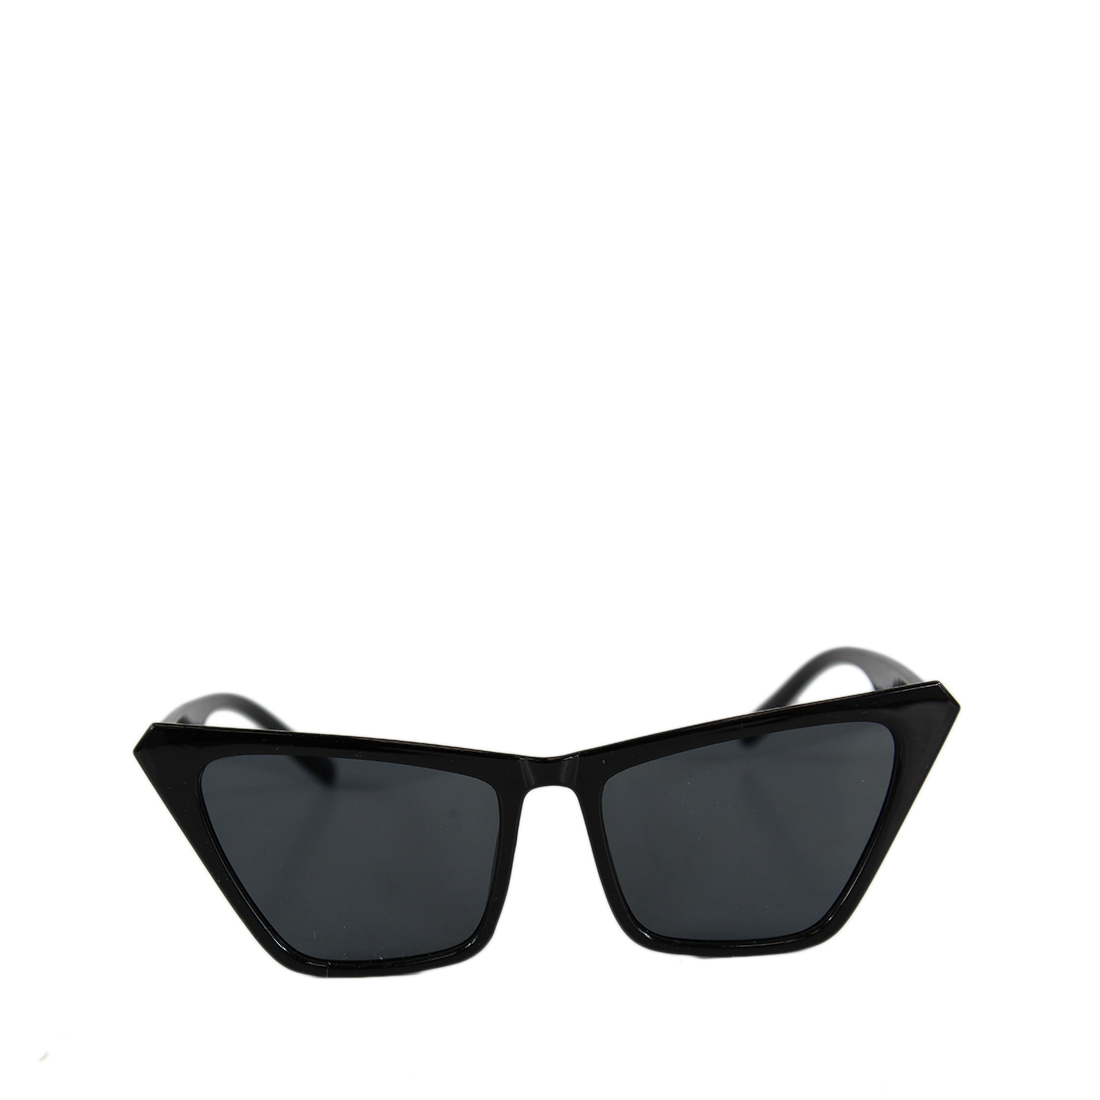 * Beveled cat eye sunglasses in shiny colour